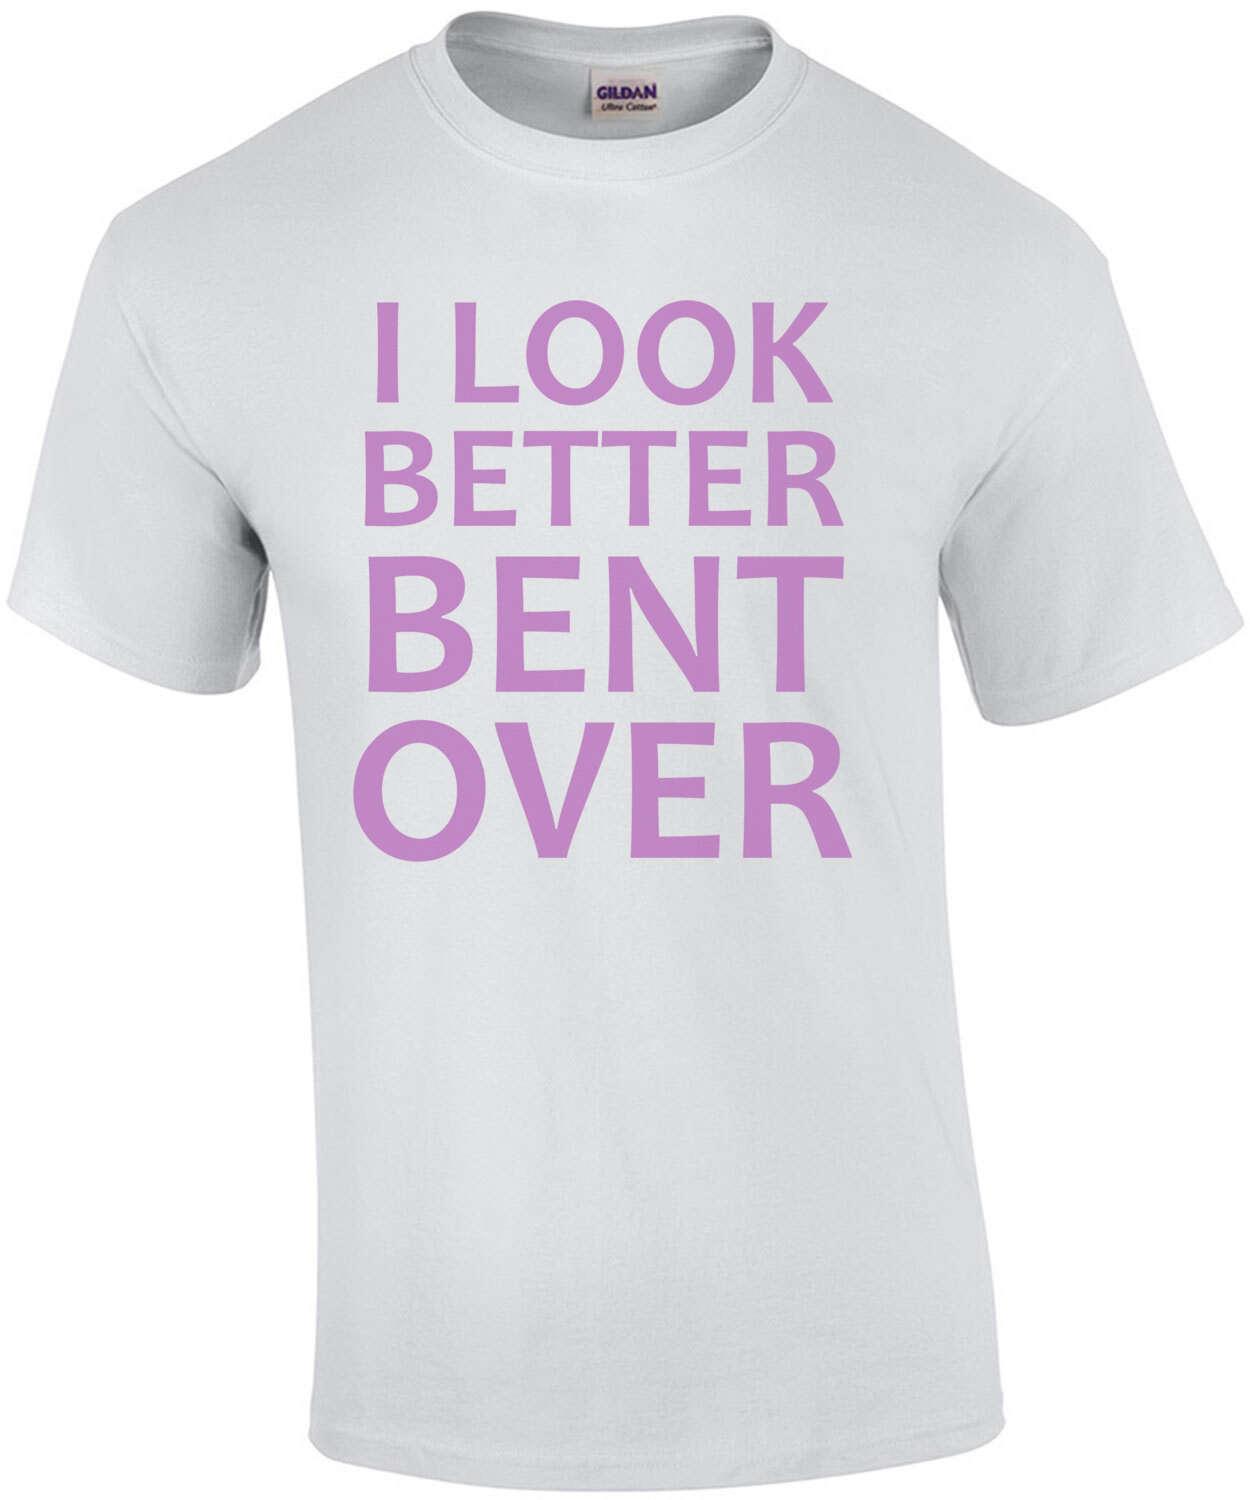 I look better bent over - funny sexual ladies t-shirt